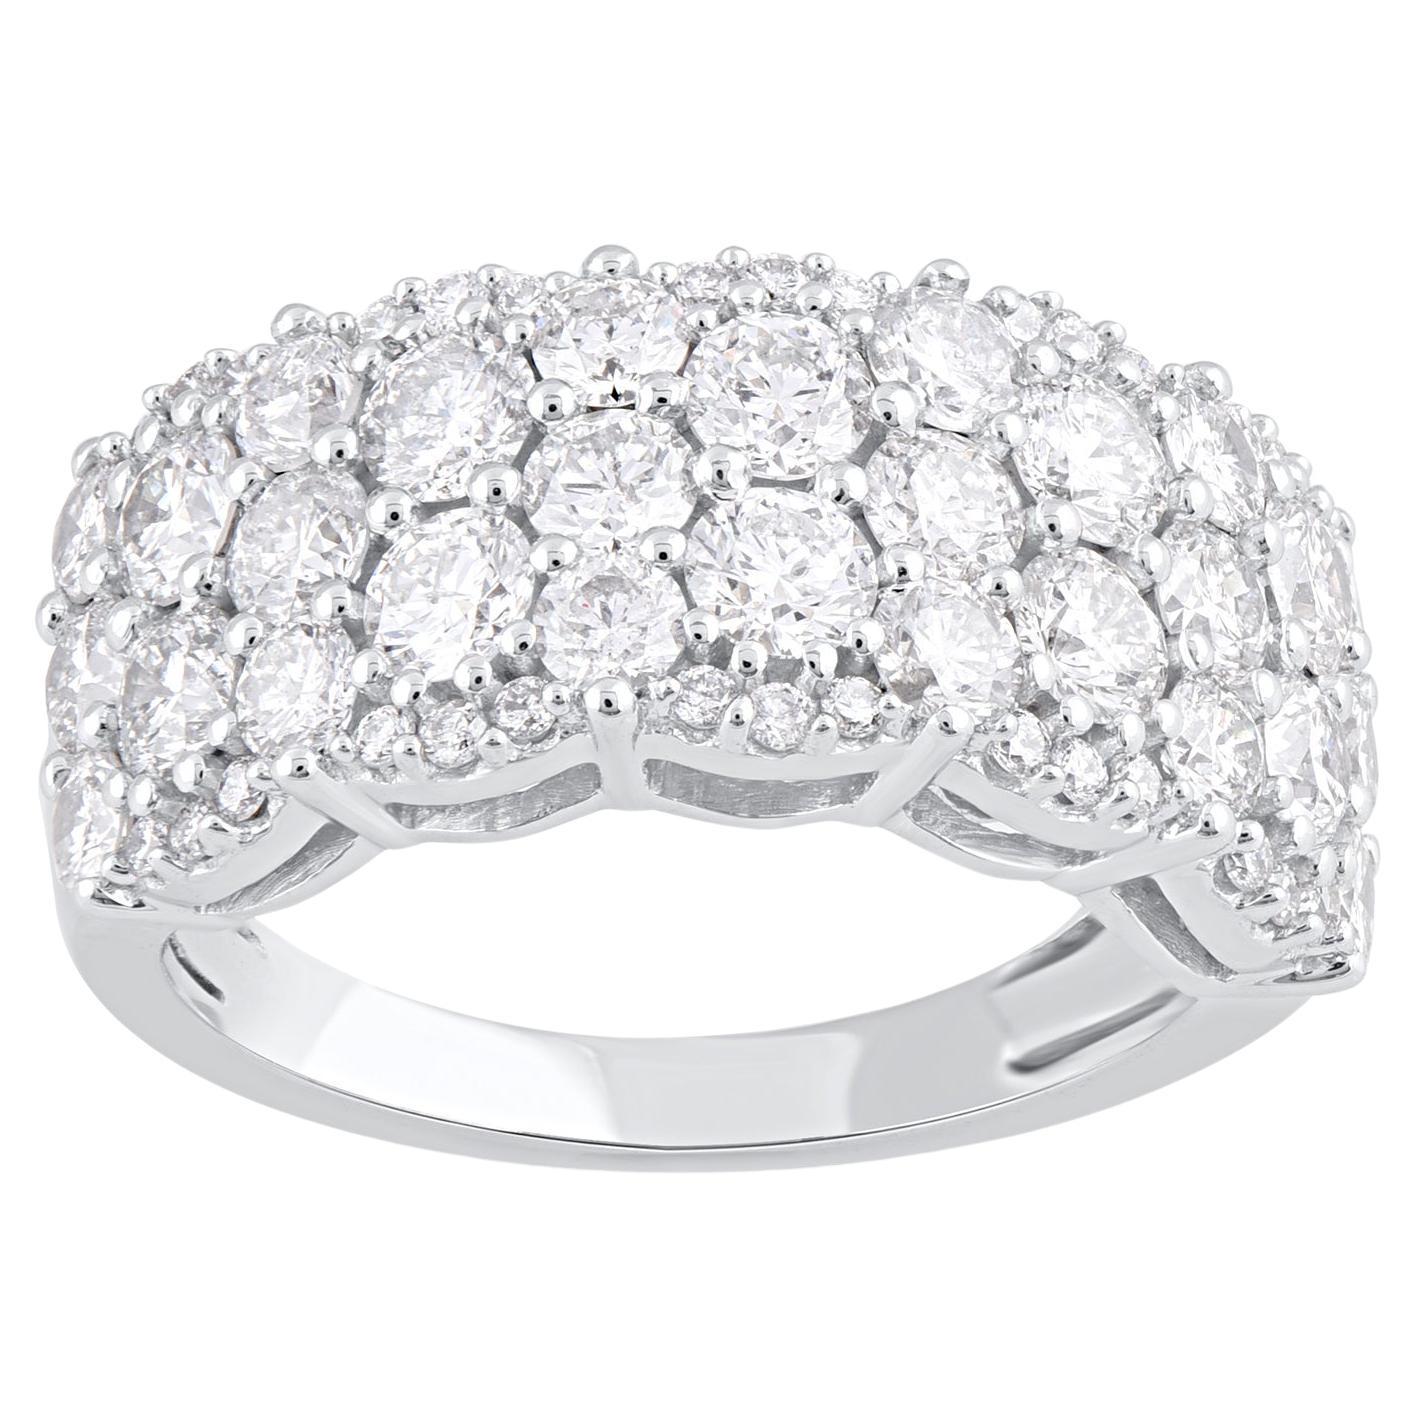 TJD 3.0 Carat Brilliante Cut Diamond 14 Karat White Gold Wedding Band Ring